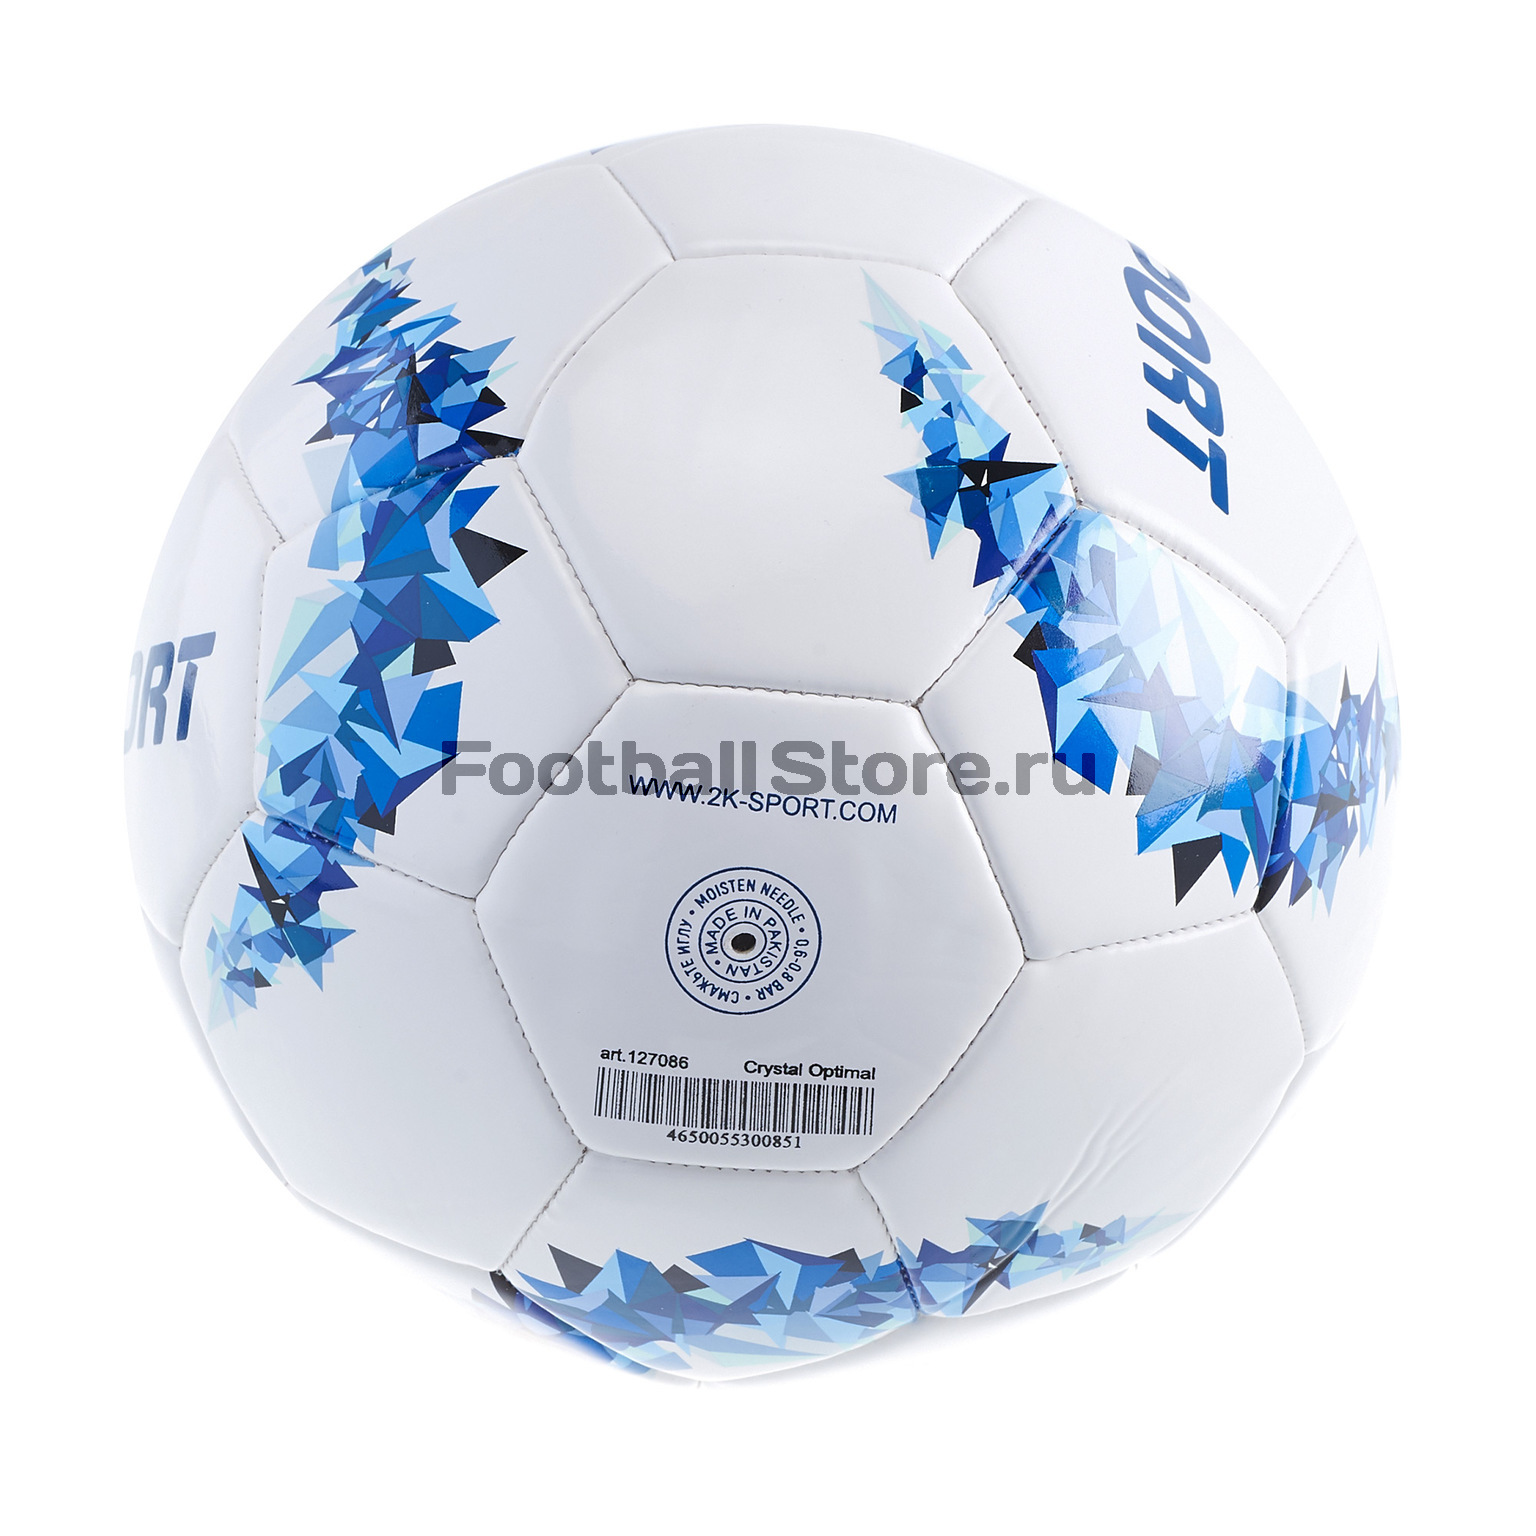 Футбольный мяч 2K Sport Crystal Optimal 127086